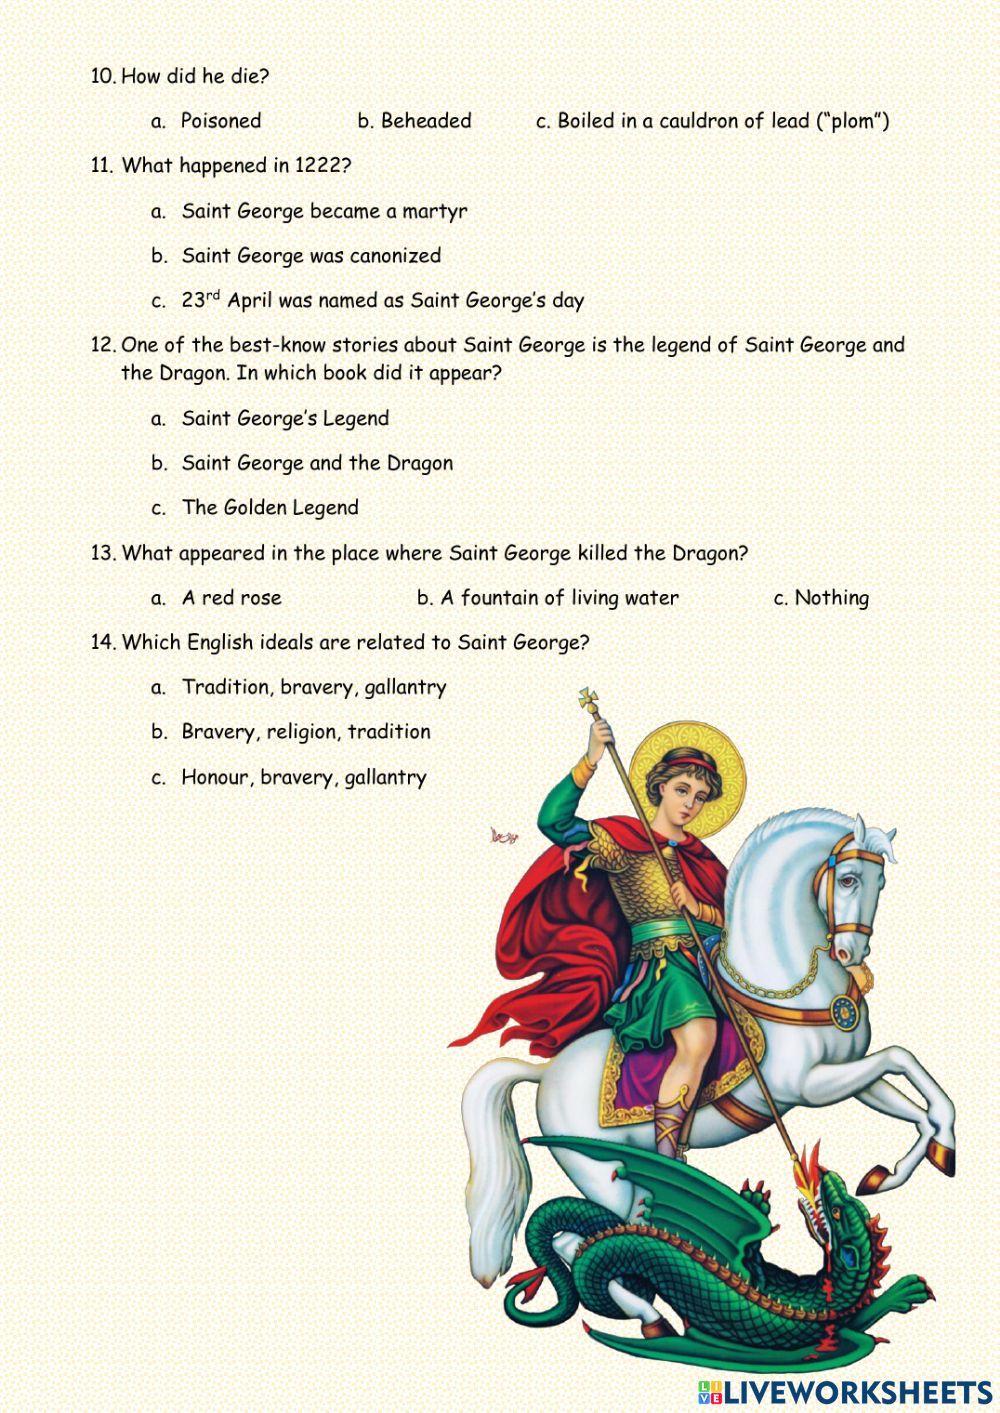 Who was Saint George?